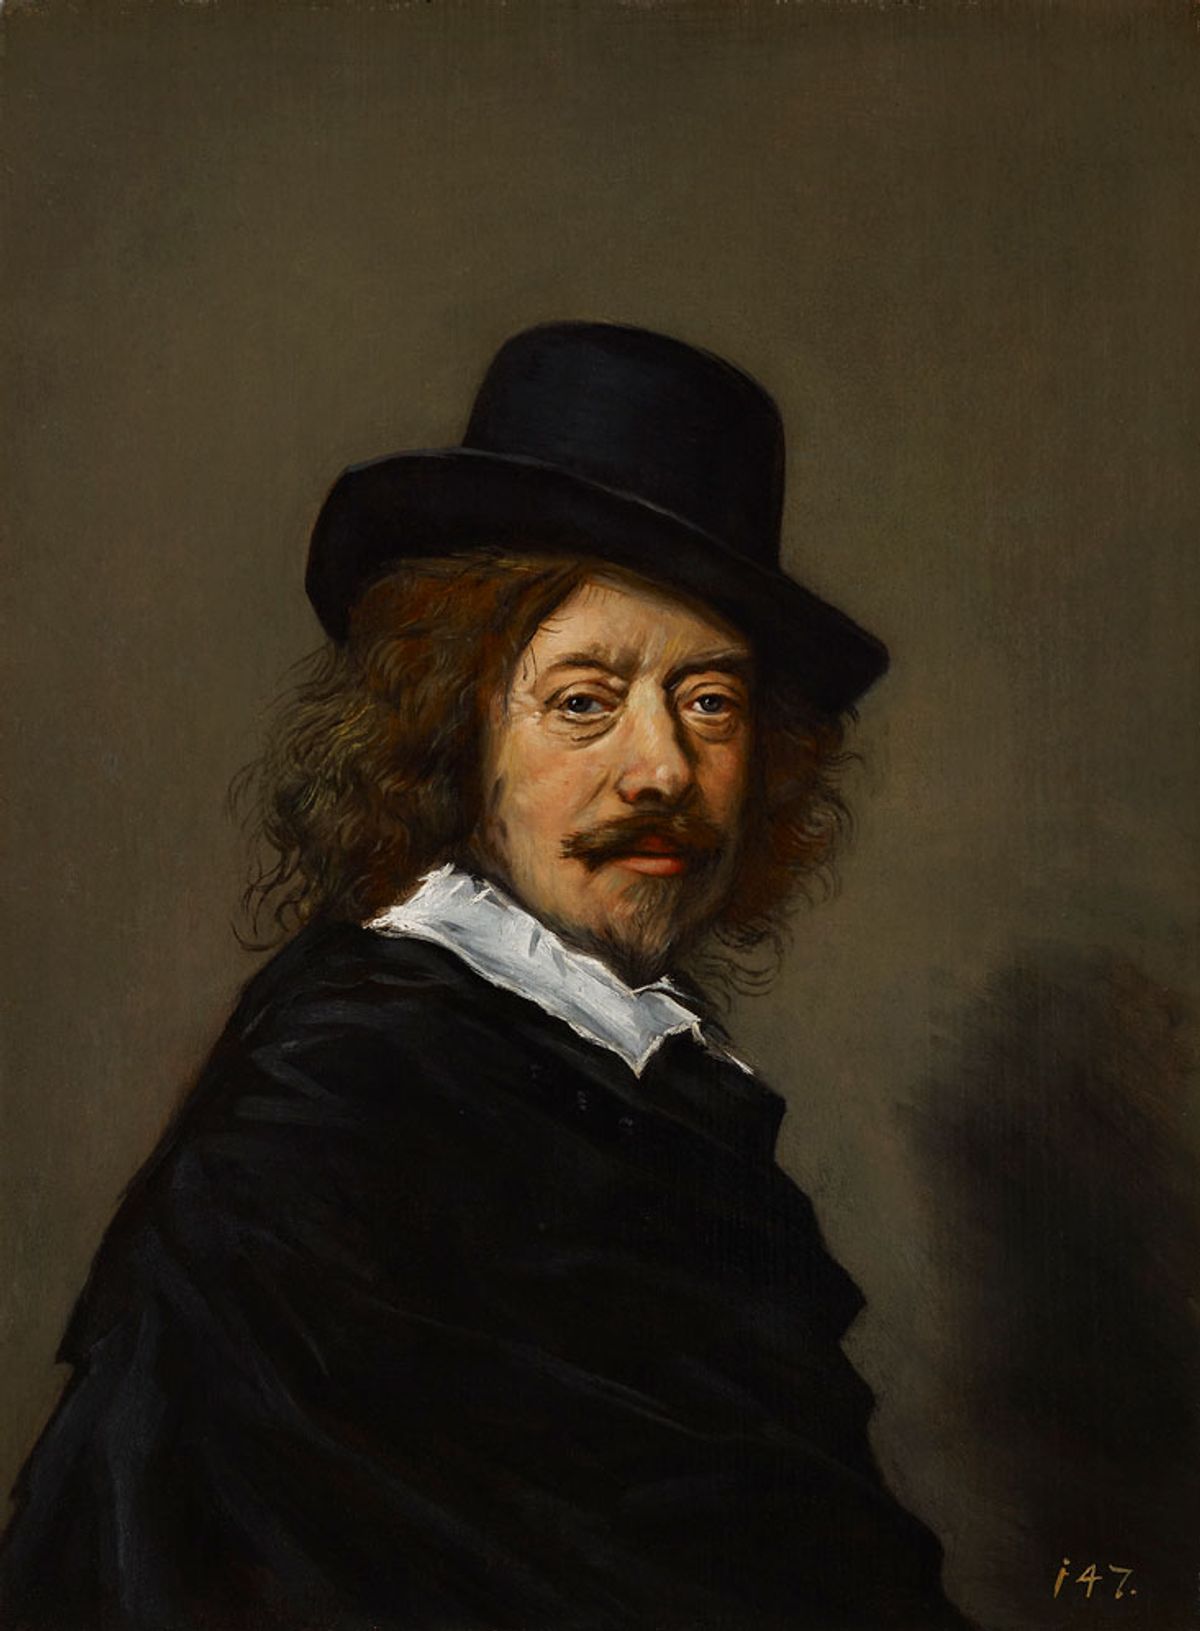 After Frans Hals, Portrait of Frans Hals (around 1650)